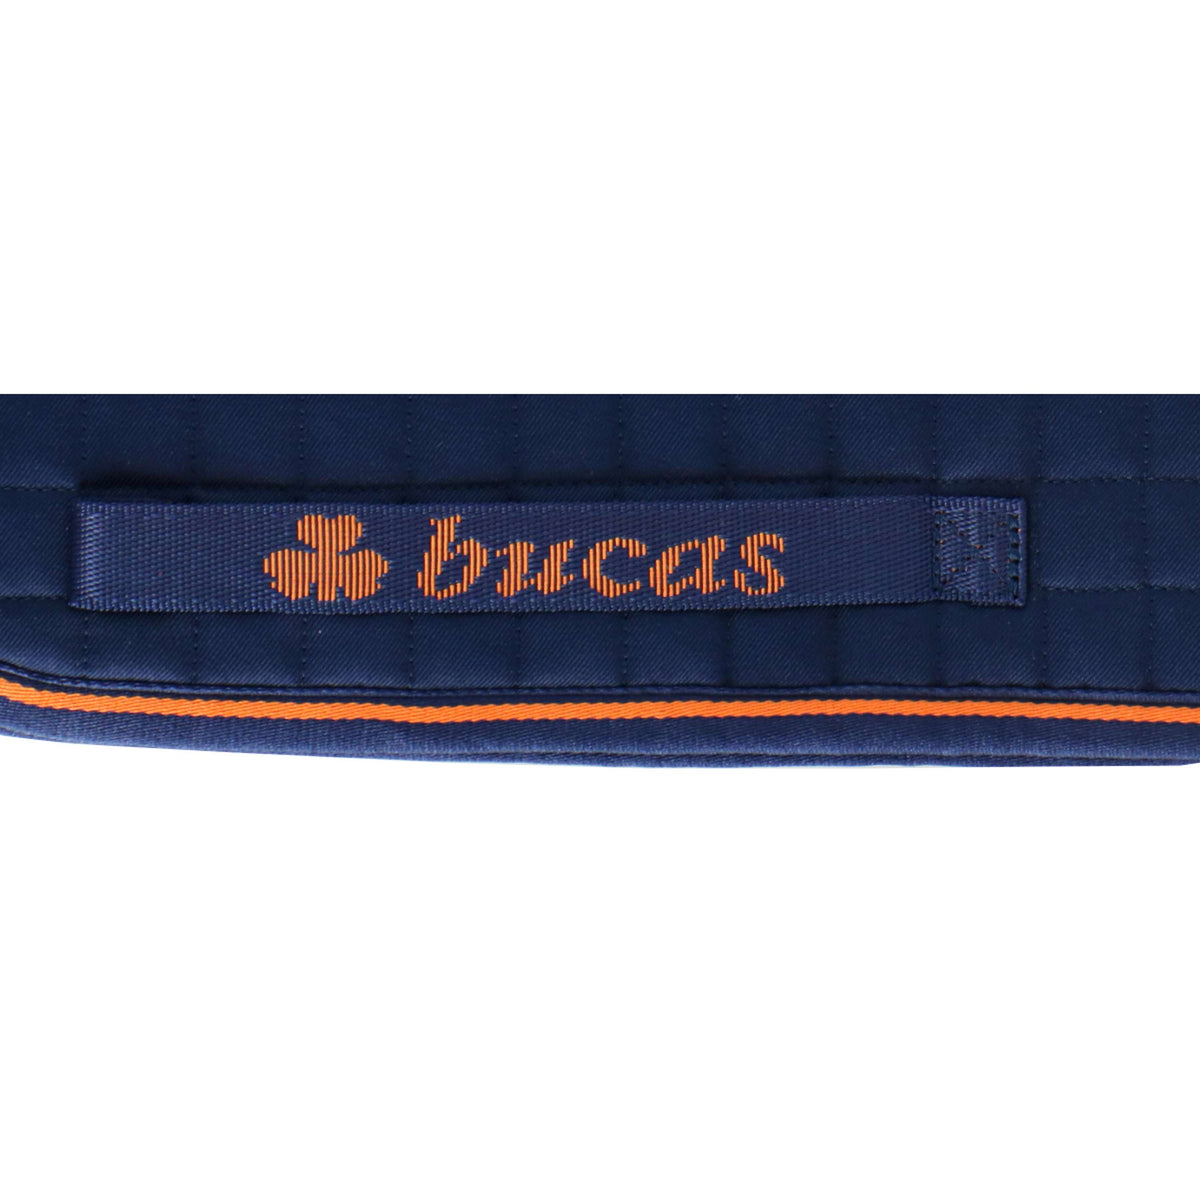 Bucas Therapy Tapis de Selle Dressage Bleu Marine/Orange